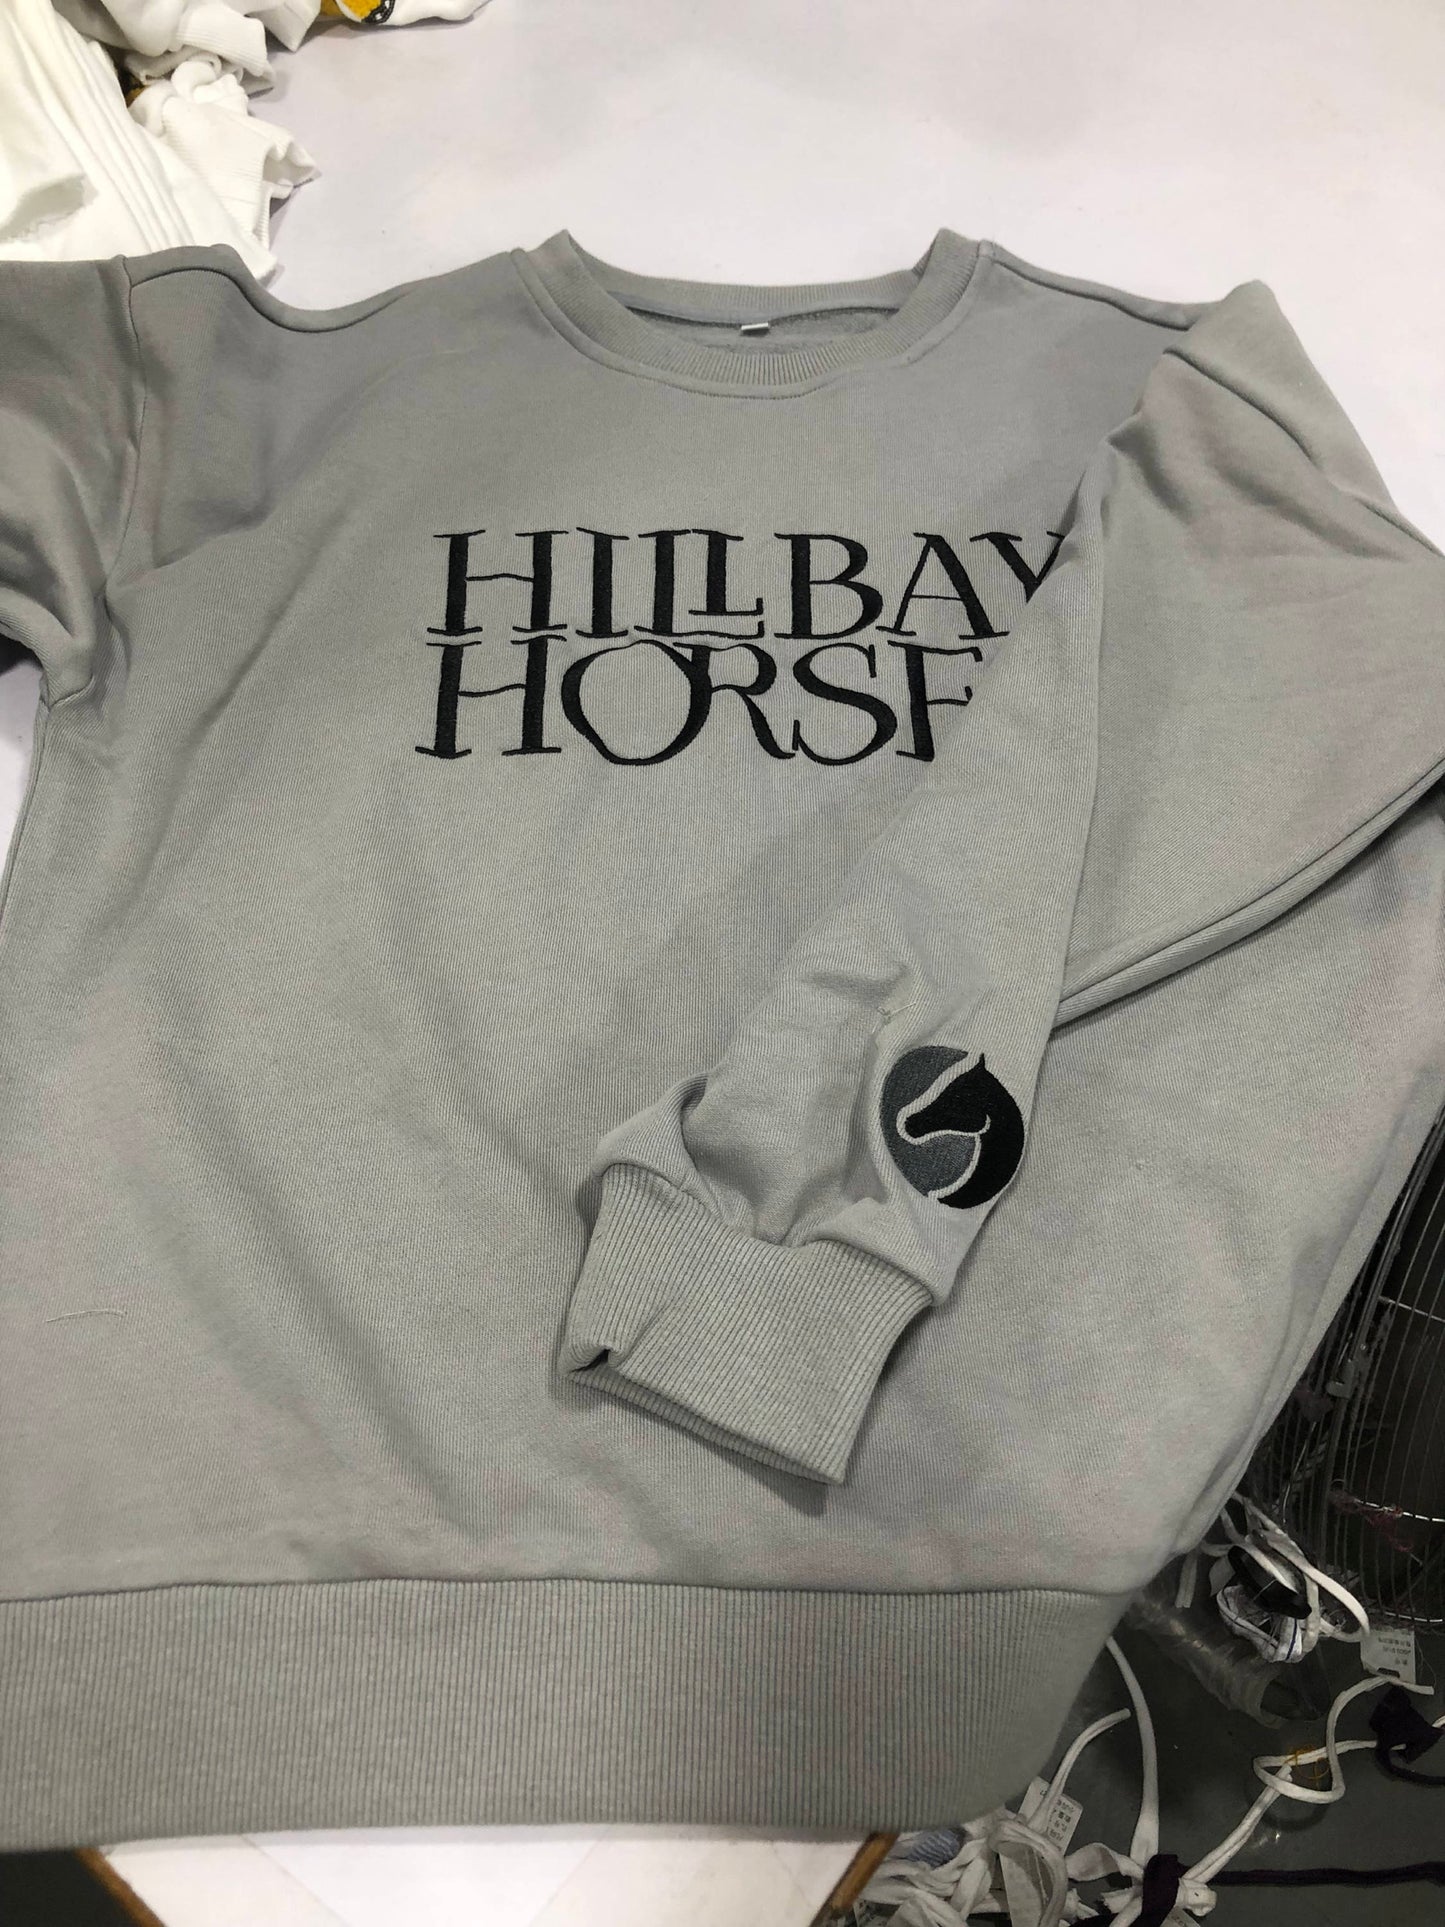 Hillbay Horses Sweatshirt